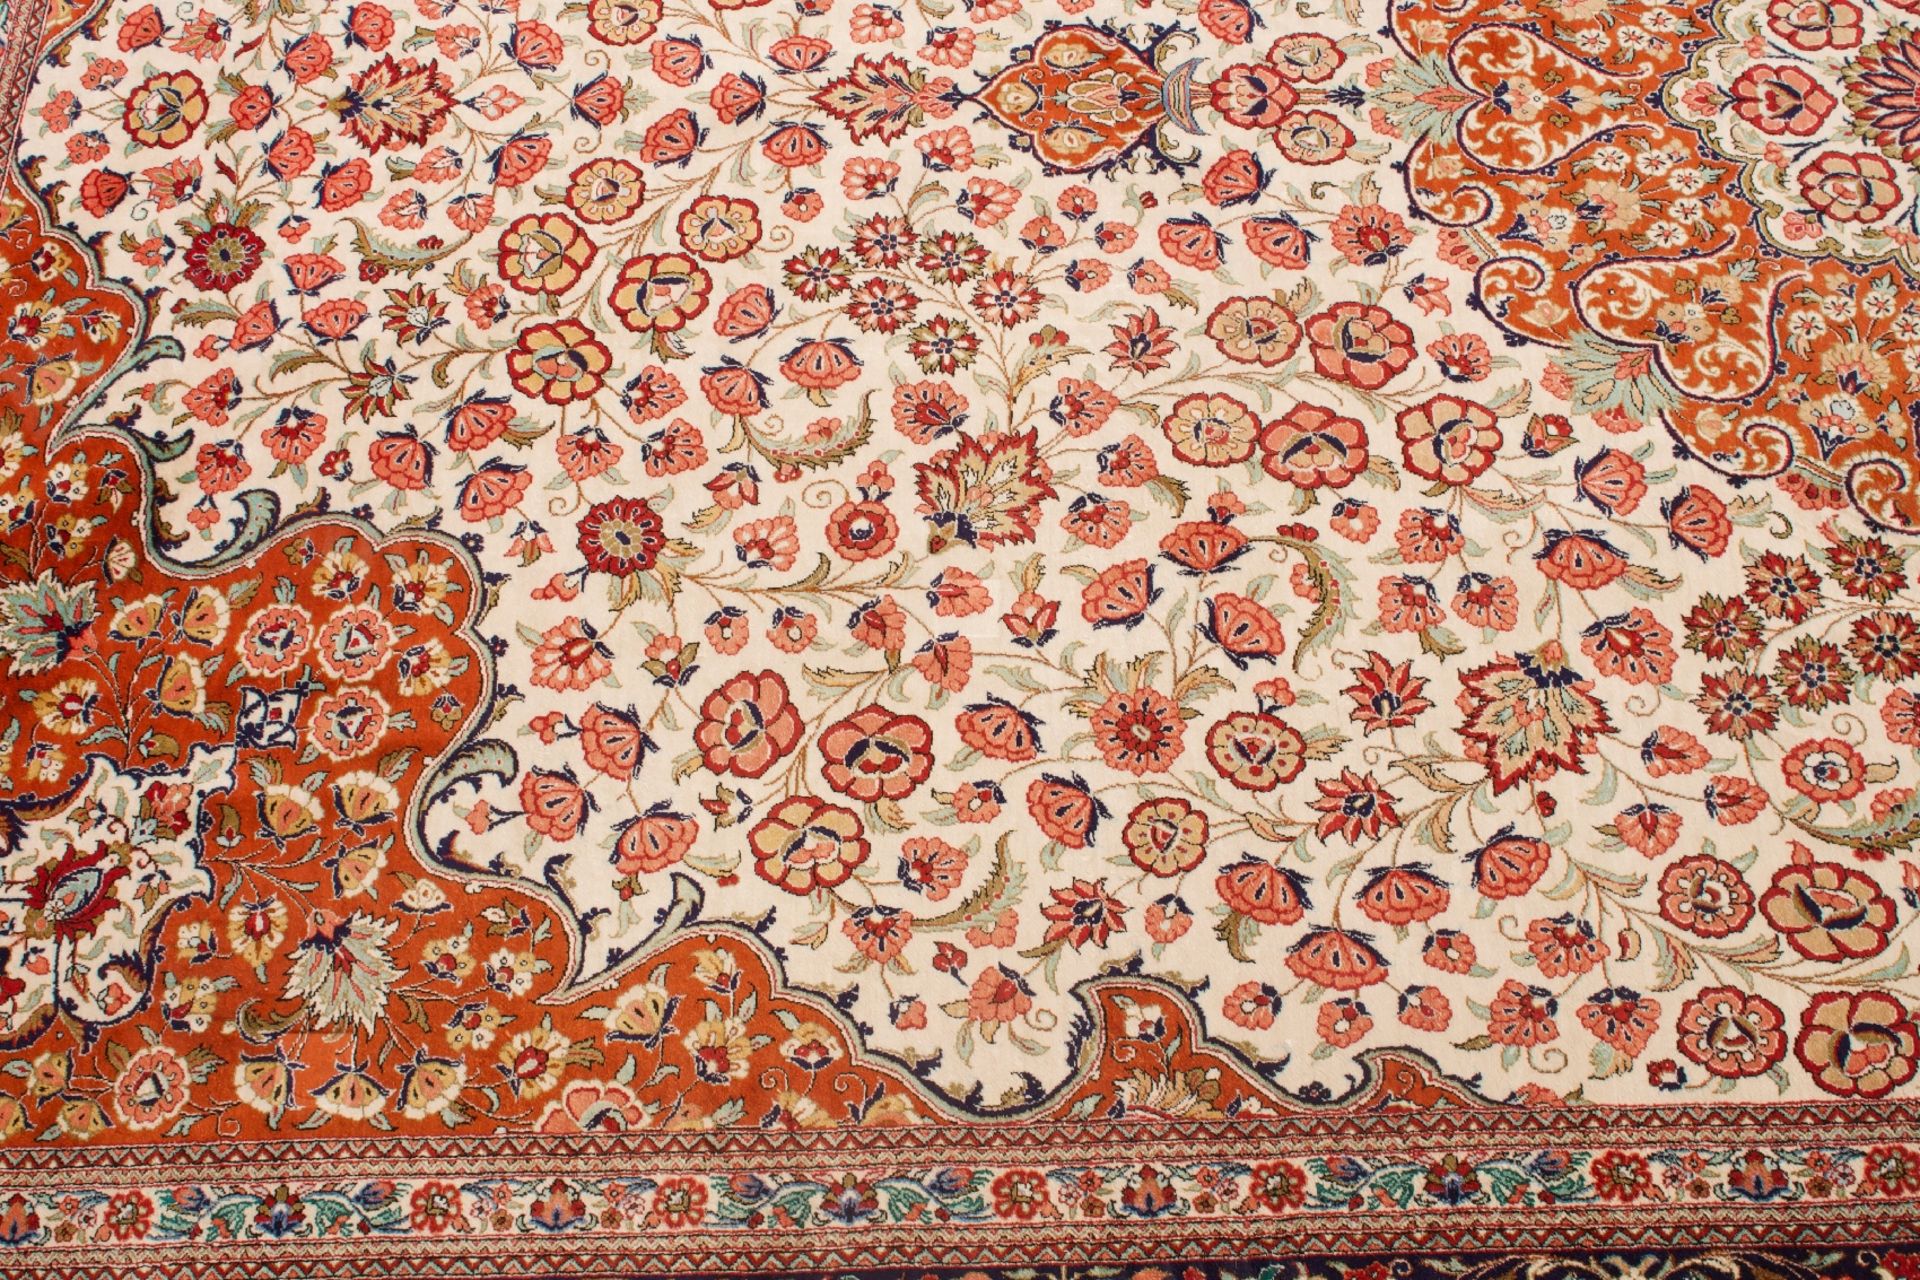 Ghom Seidenteppich Iran | Ghom silk carpet Iran - Image 3 of 5